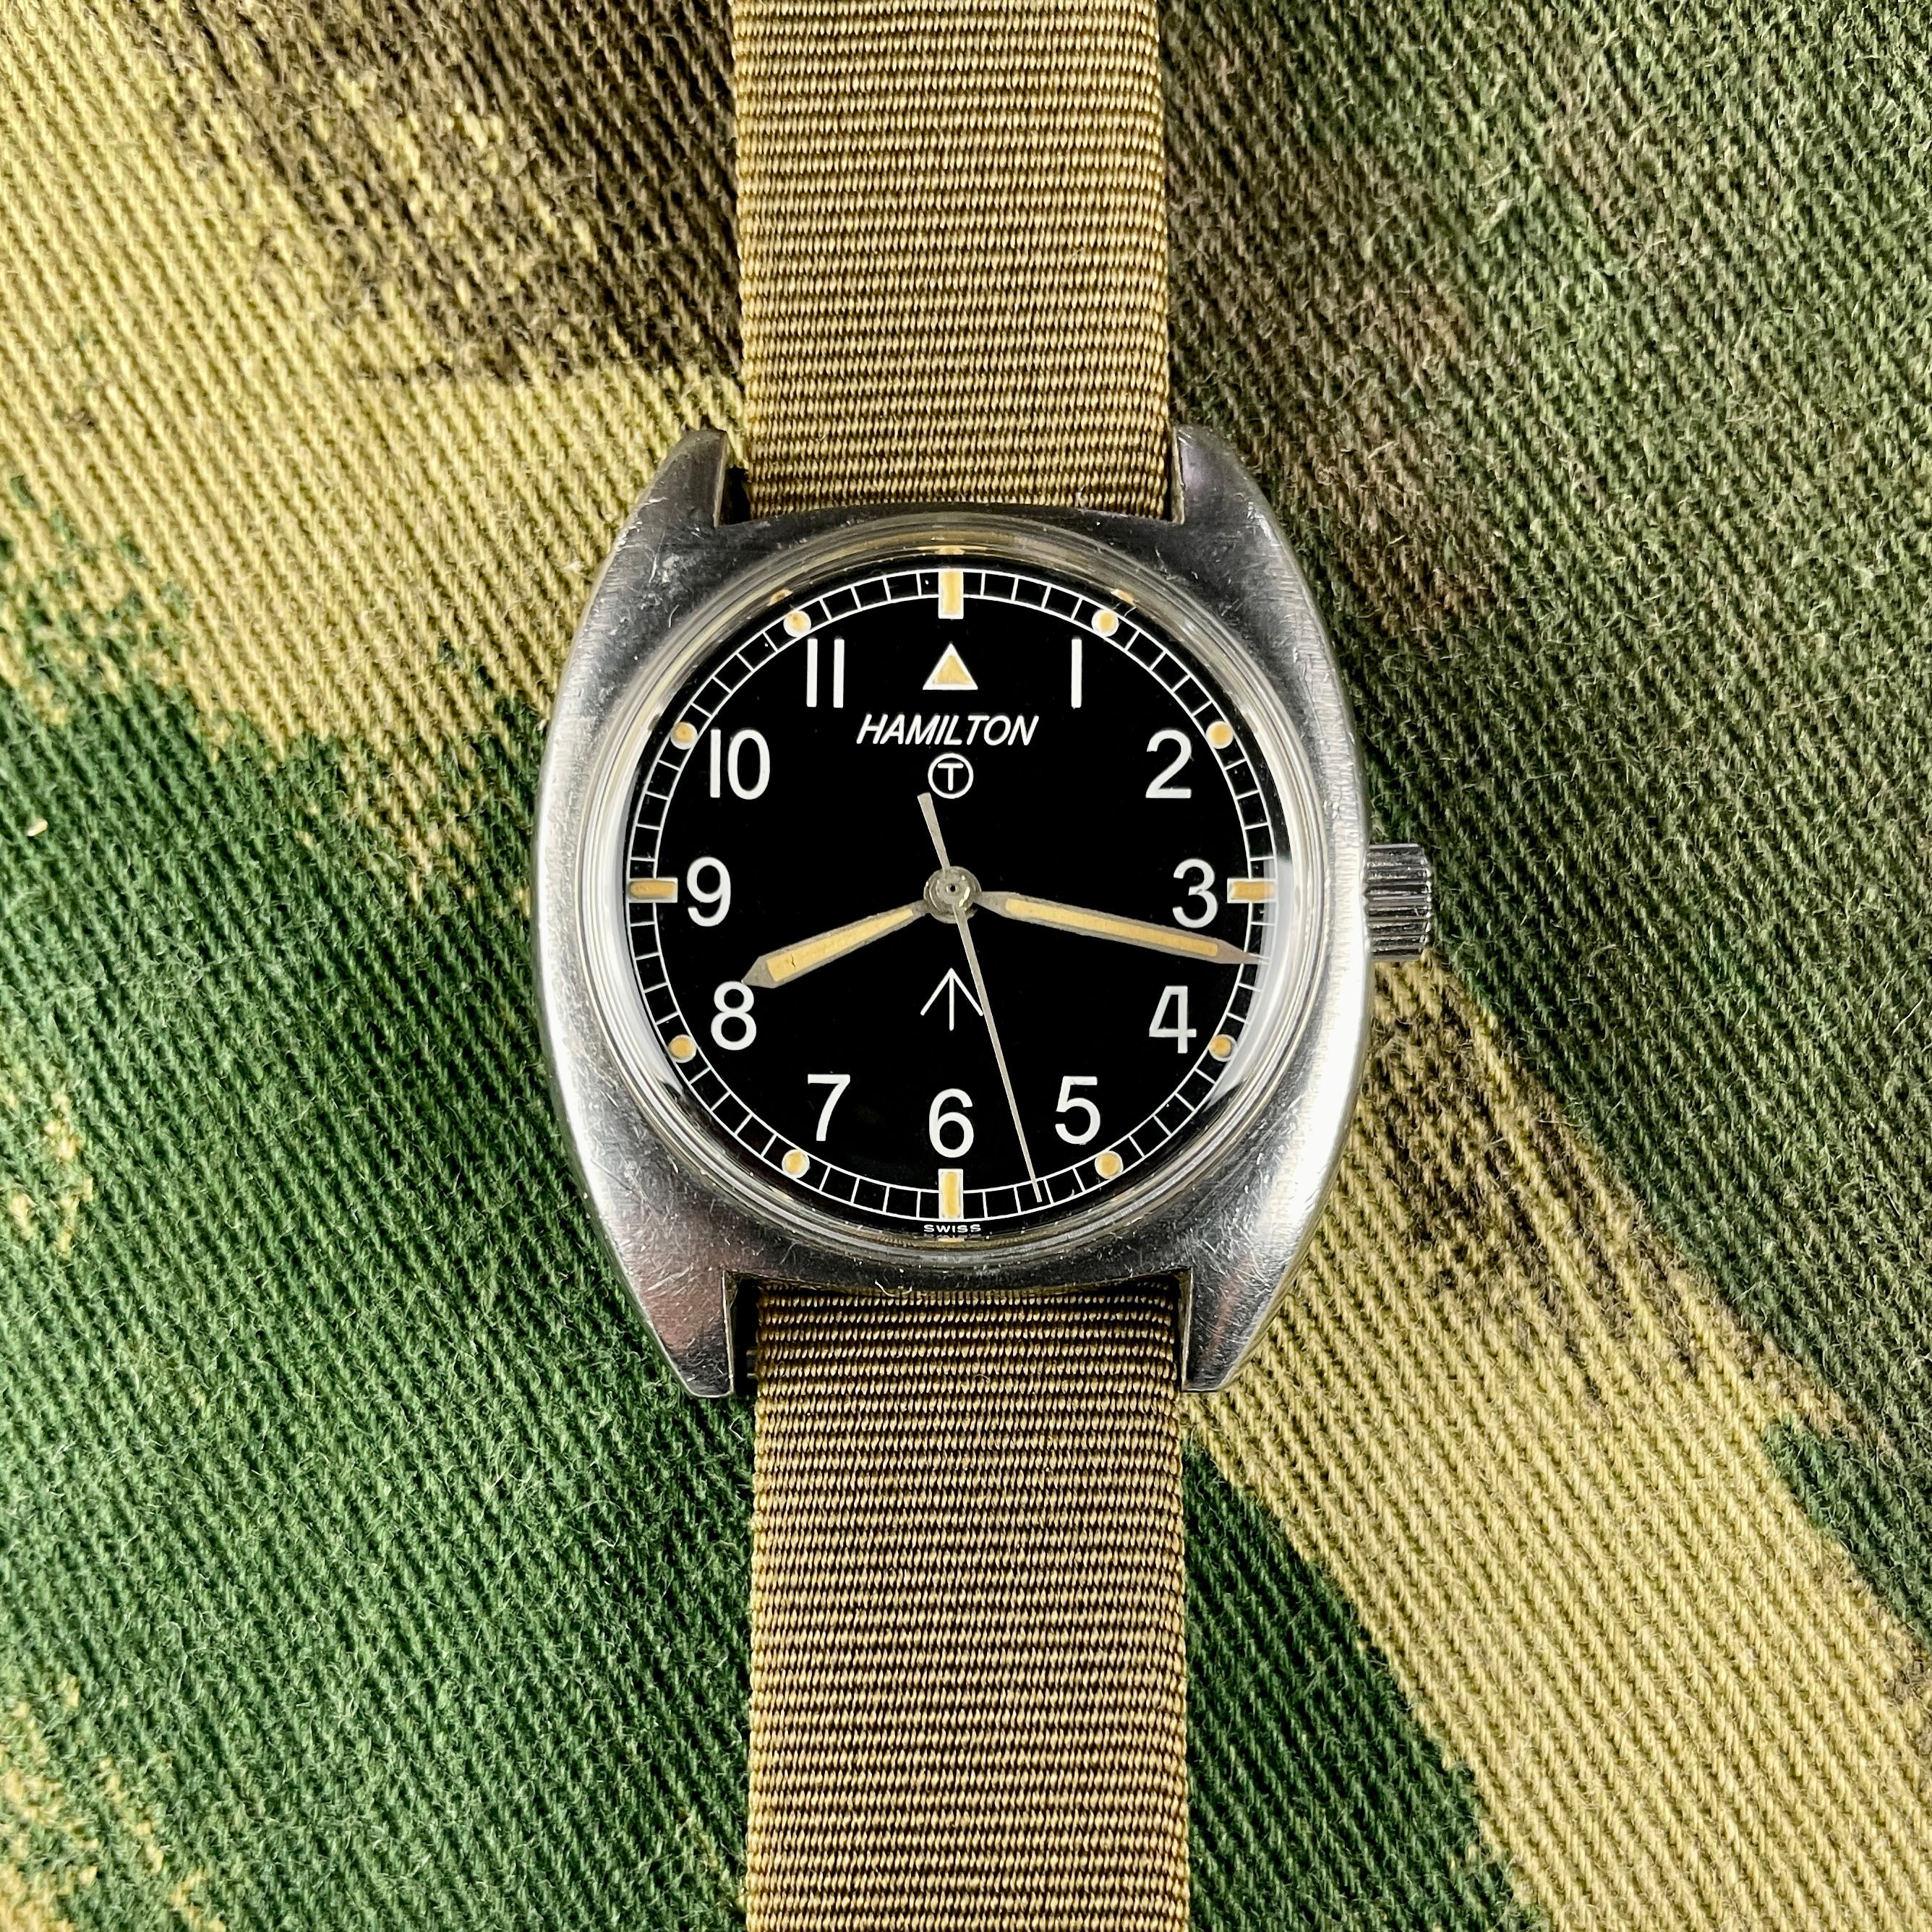 British Army 1973 Hamilton W10 Field Watch – The Major's Tailor